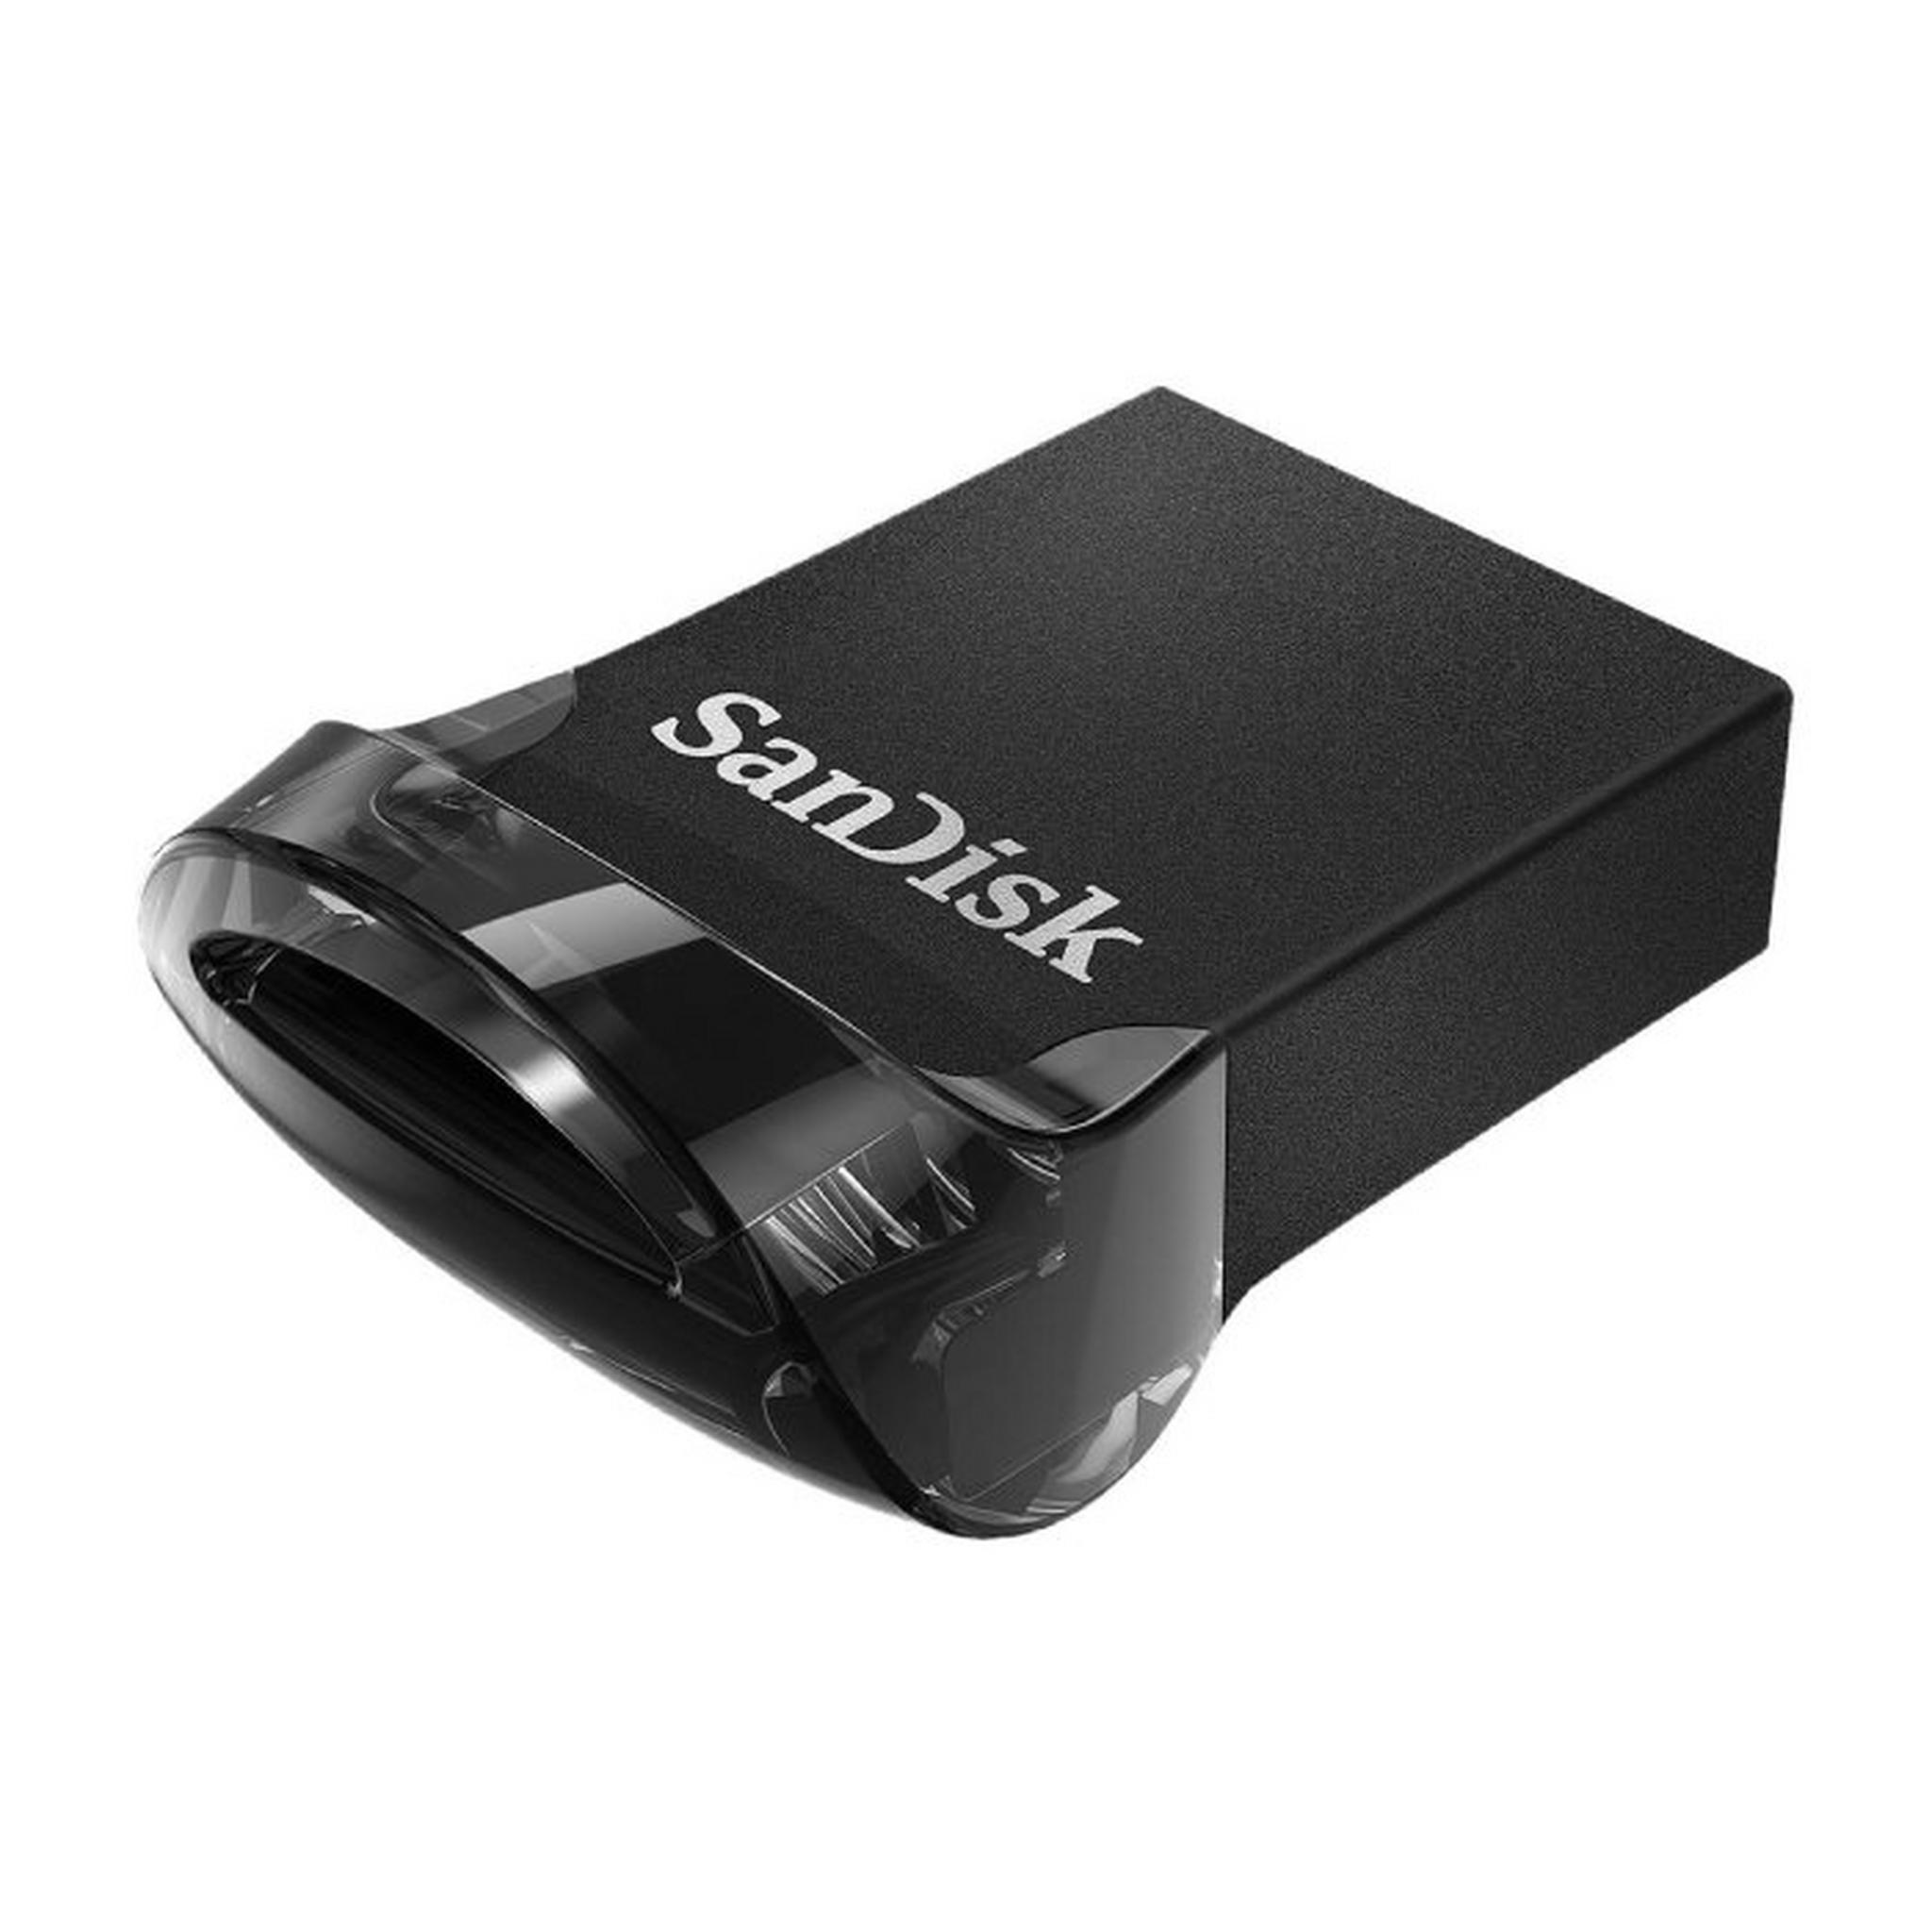 SanDisk Ultra Fit USB 3.2 Flash Drive, 512G – Black